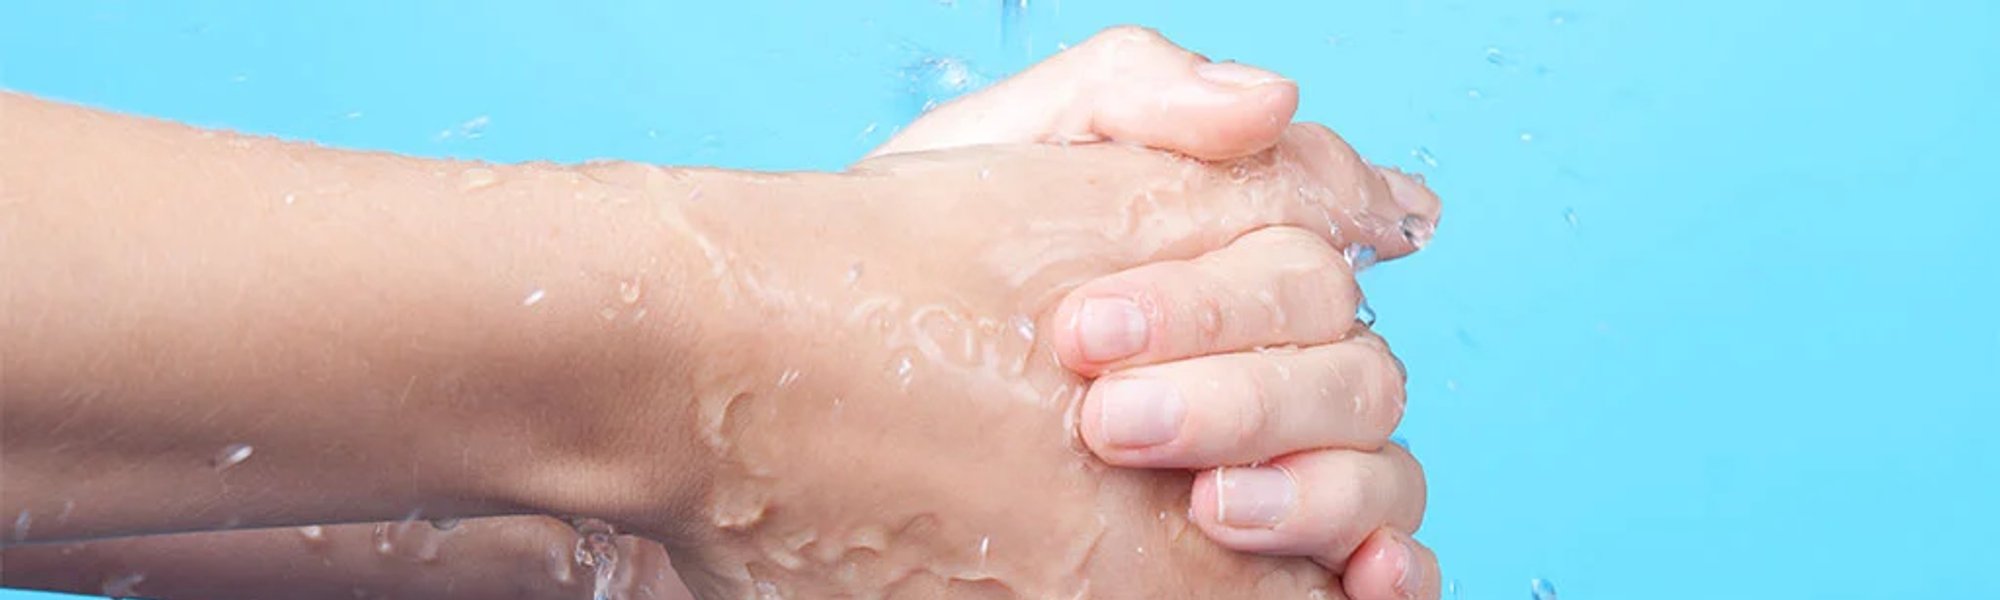 Larocheposay ArticlePage Sensitive Cleansing sensitive skin